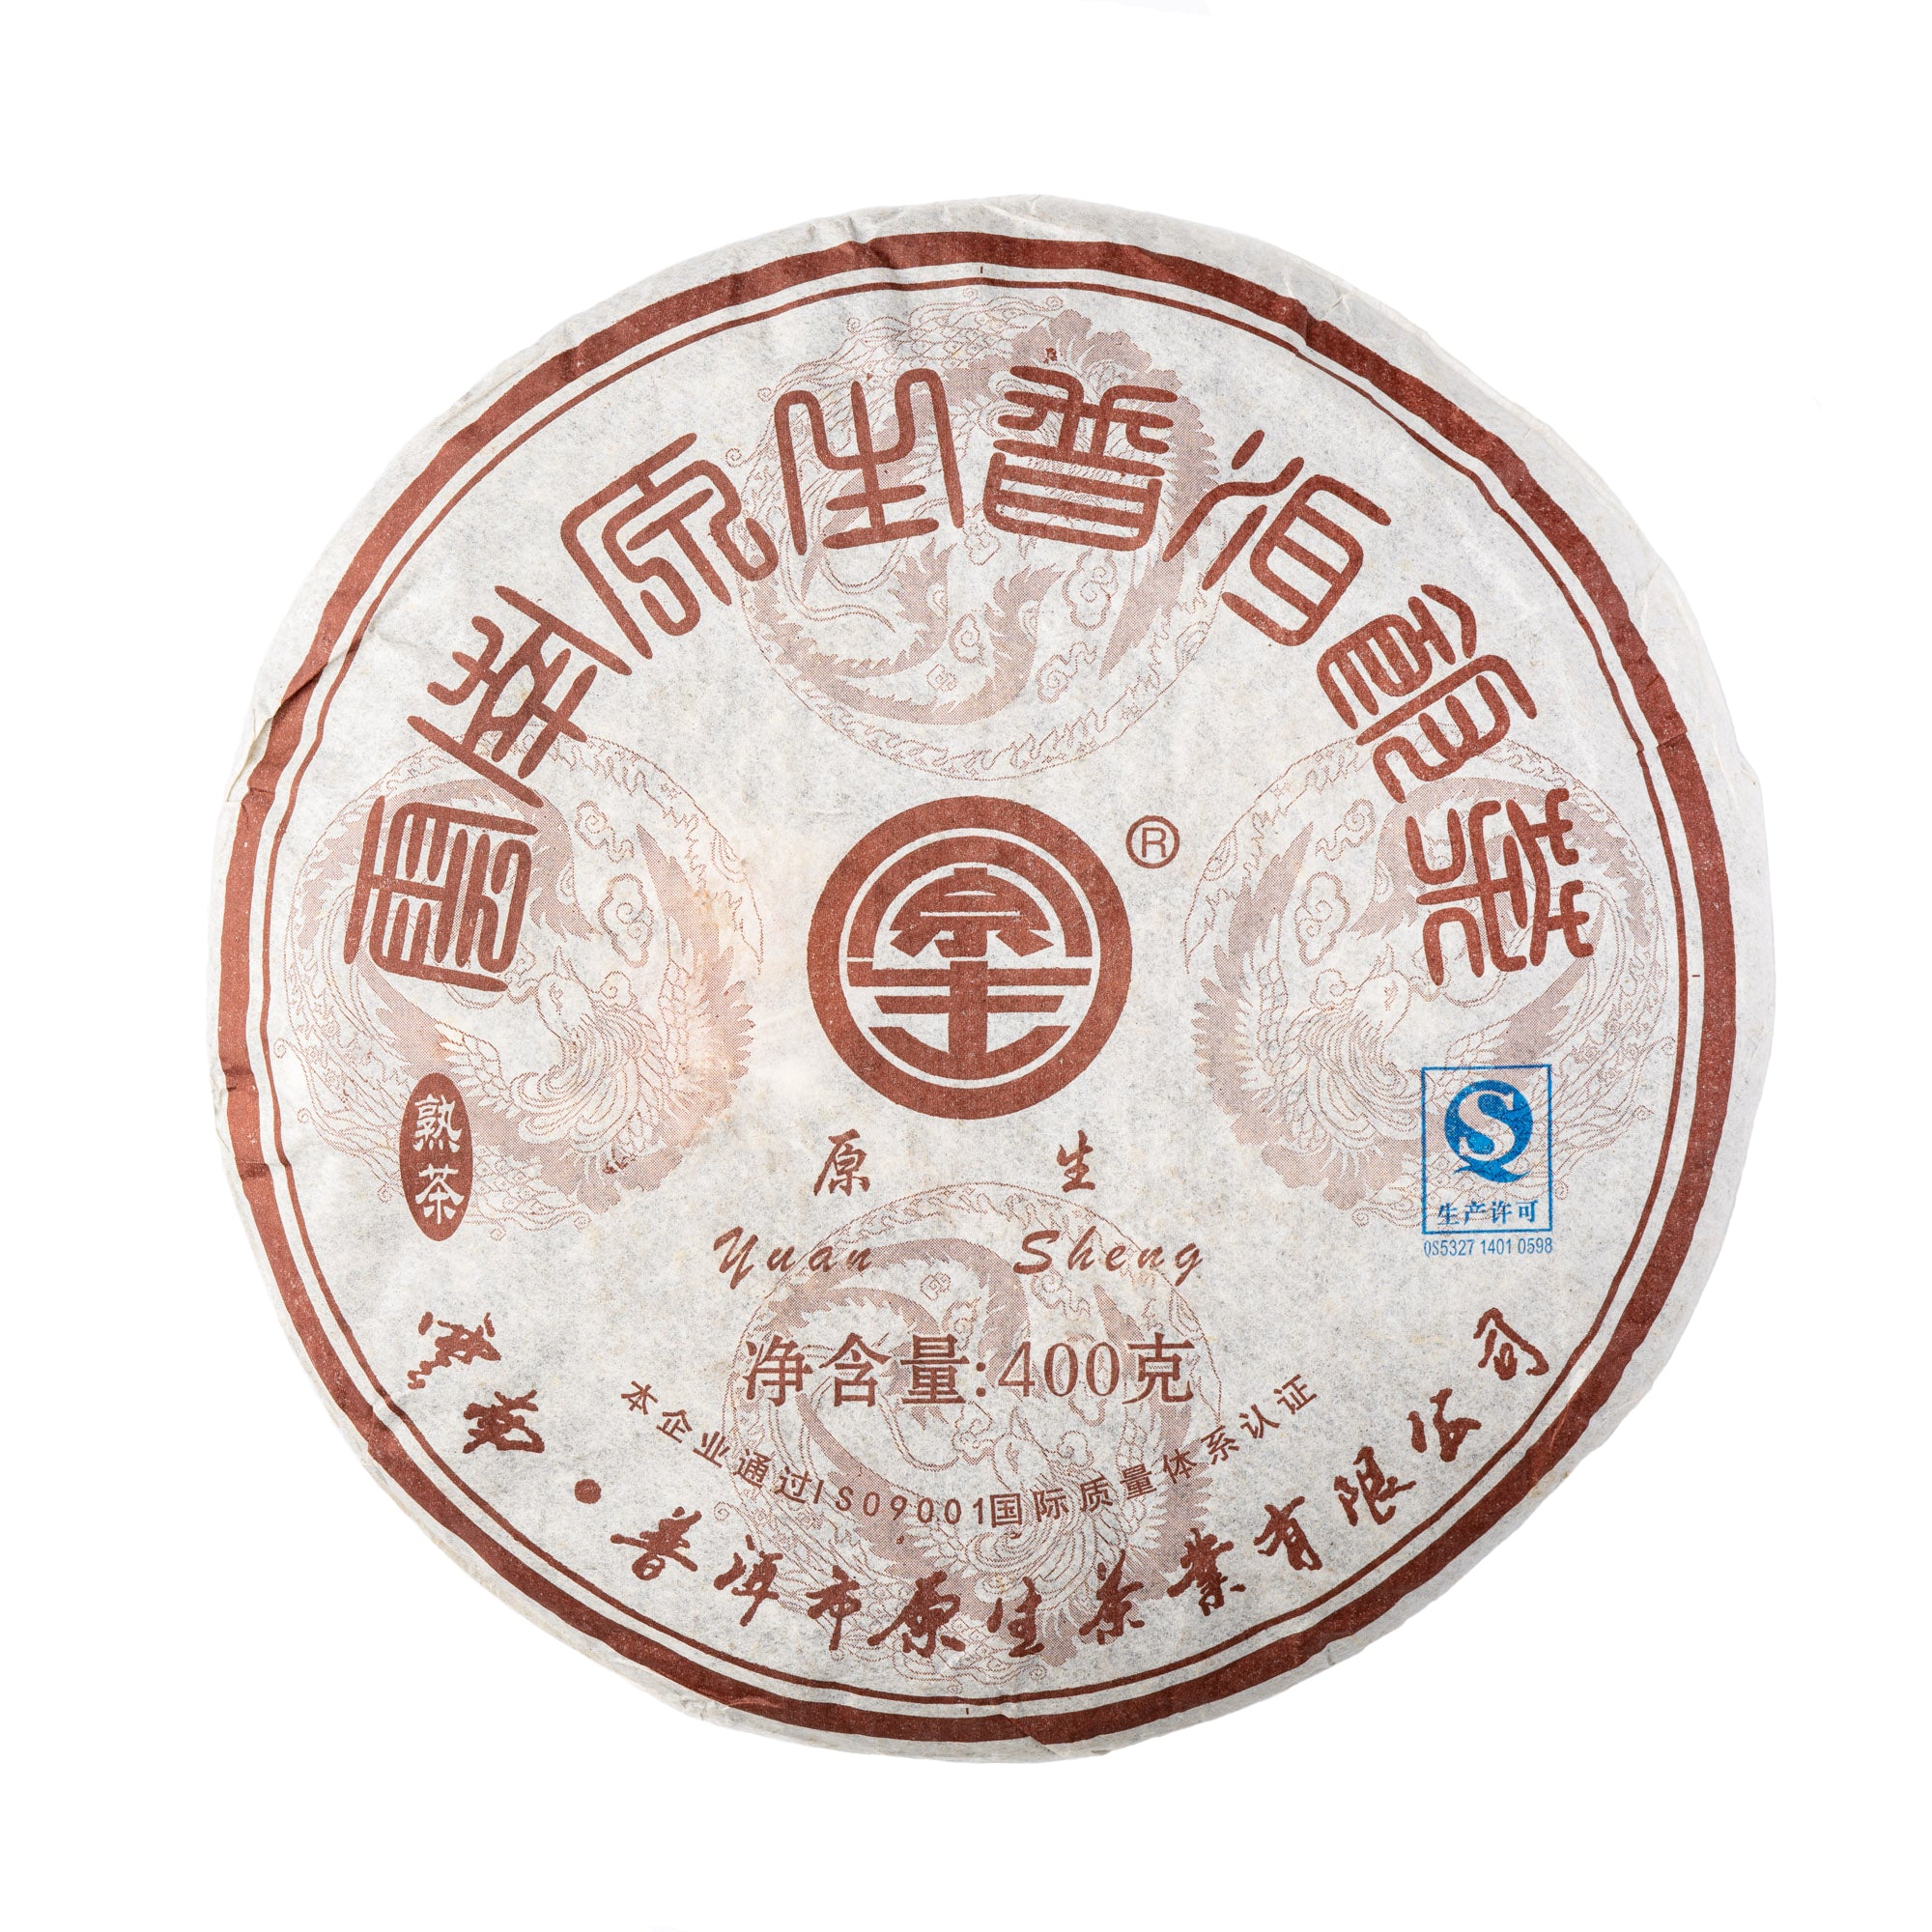 Pu-erh Shu Tea Cake - Dark Fermented Tea - Wellness Tea - Antioxidant & Probiotic Rich | Heavenly Tea Leaves